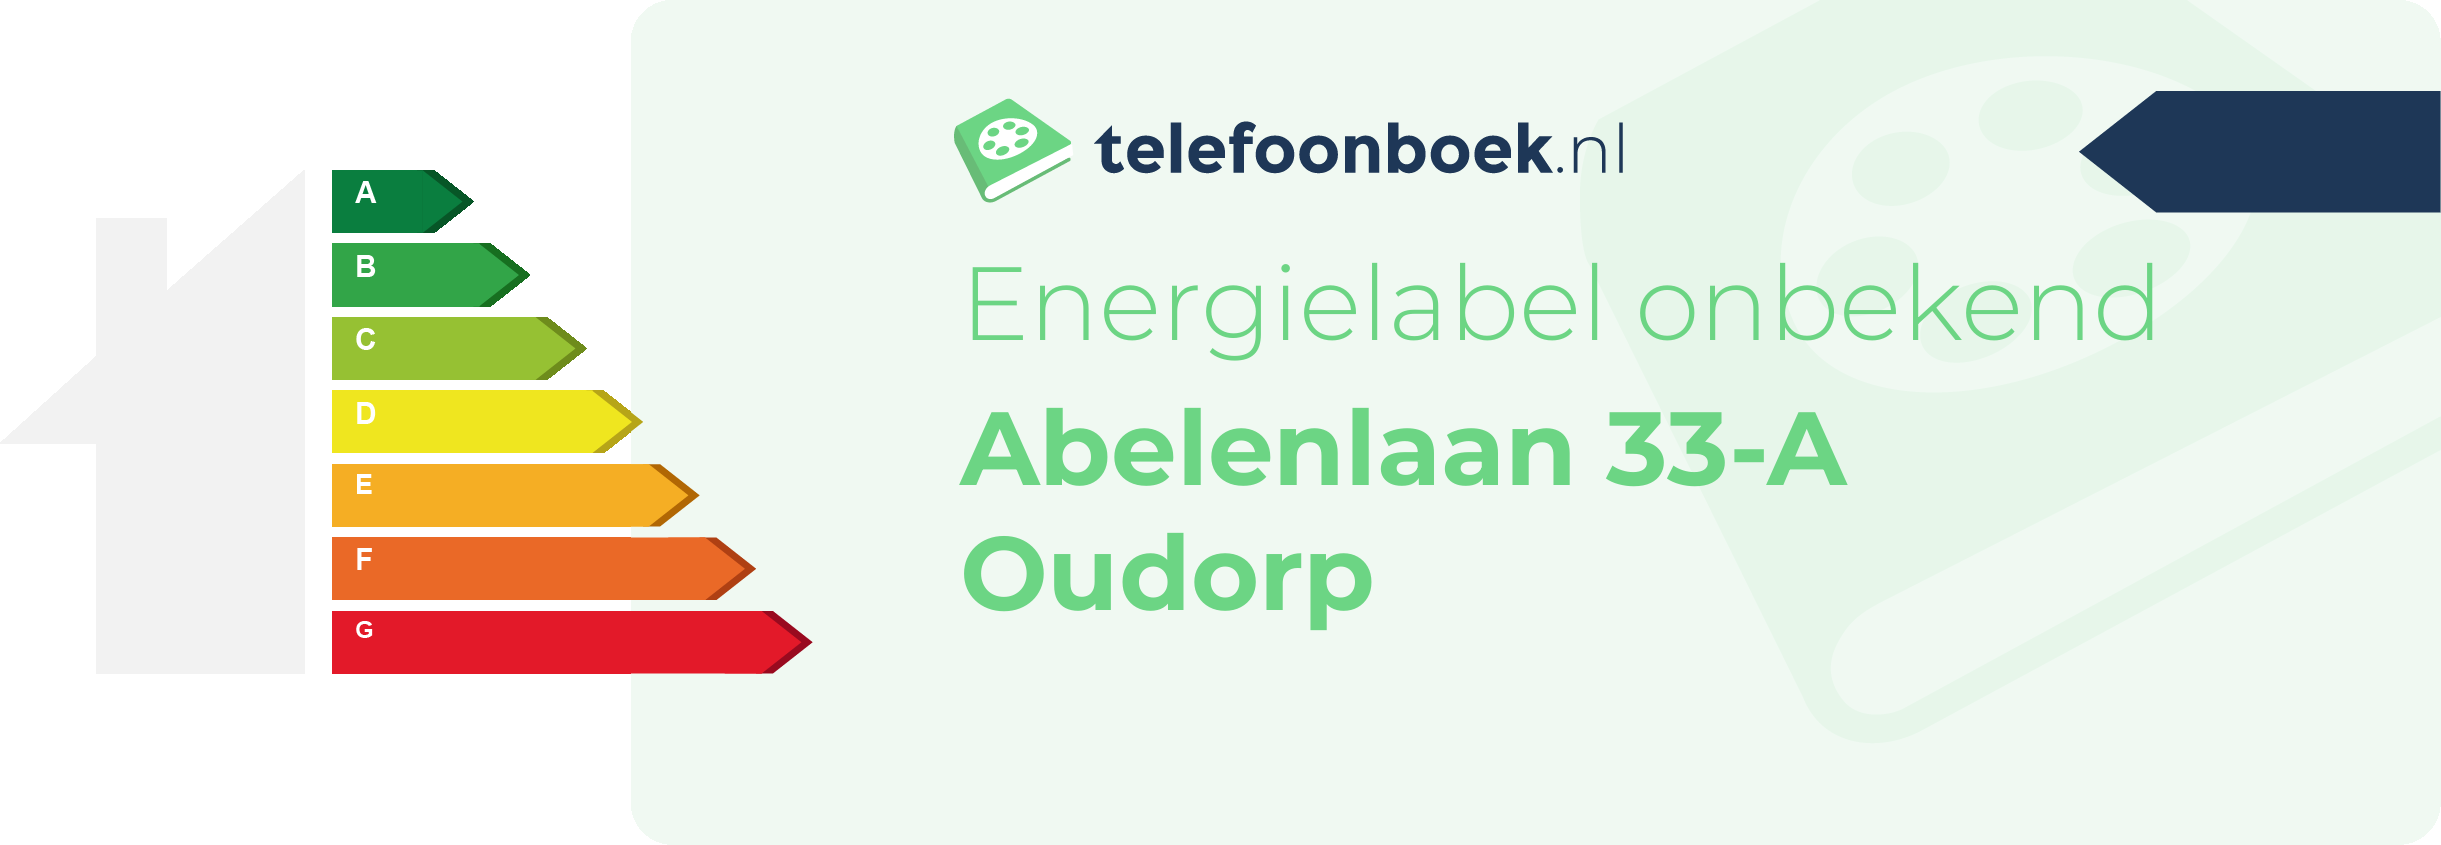 Energielabel Abelenlaan 33-A Oudorp